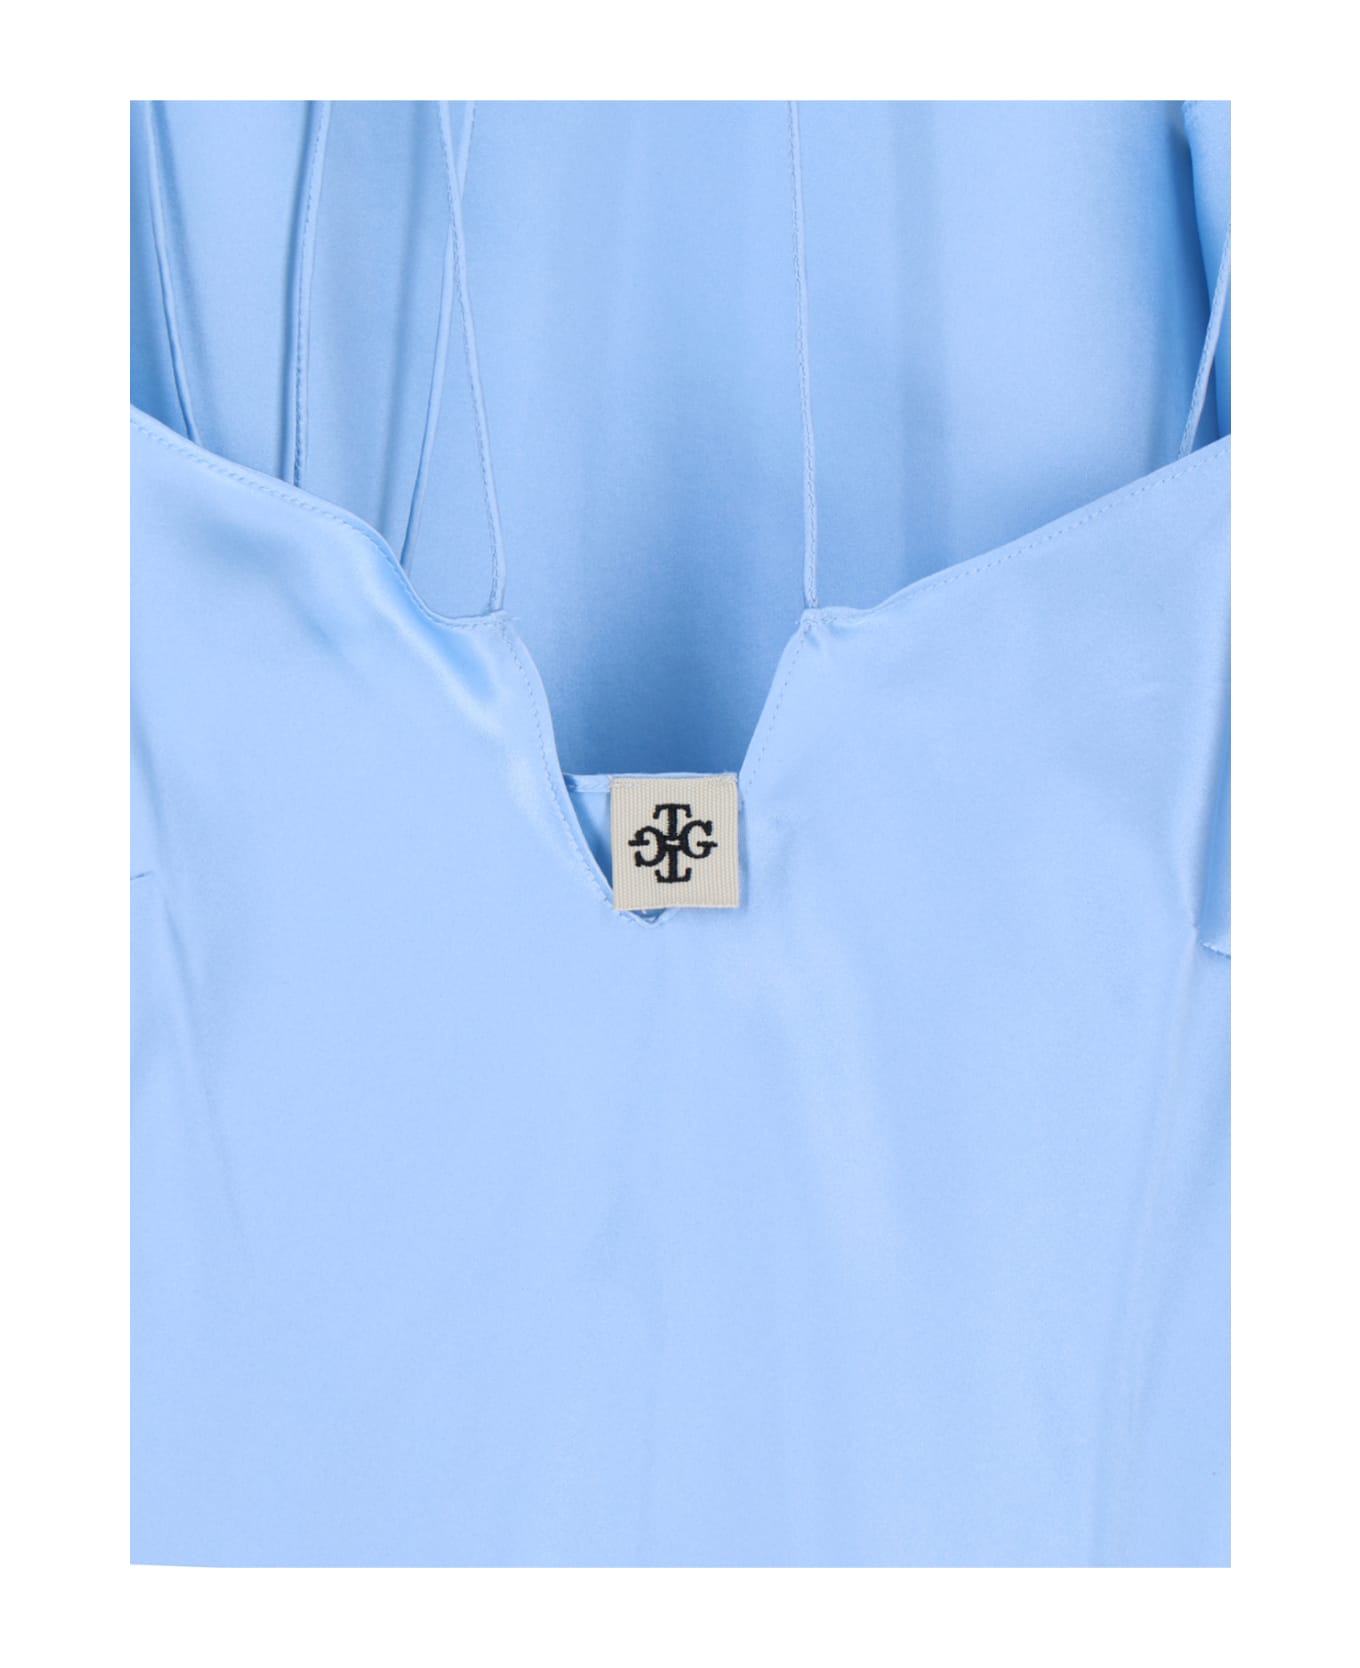 The Garment 'catania' Maxi Dress - Light Blue